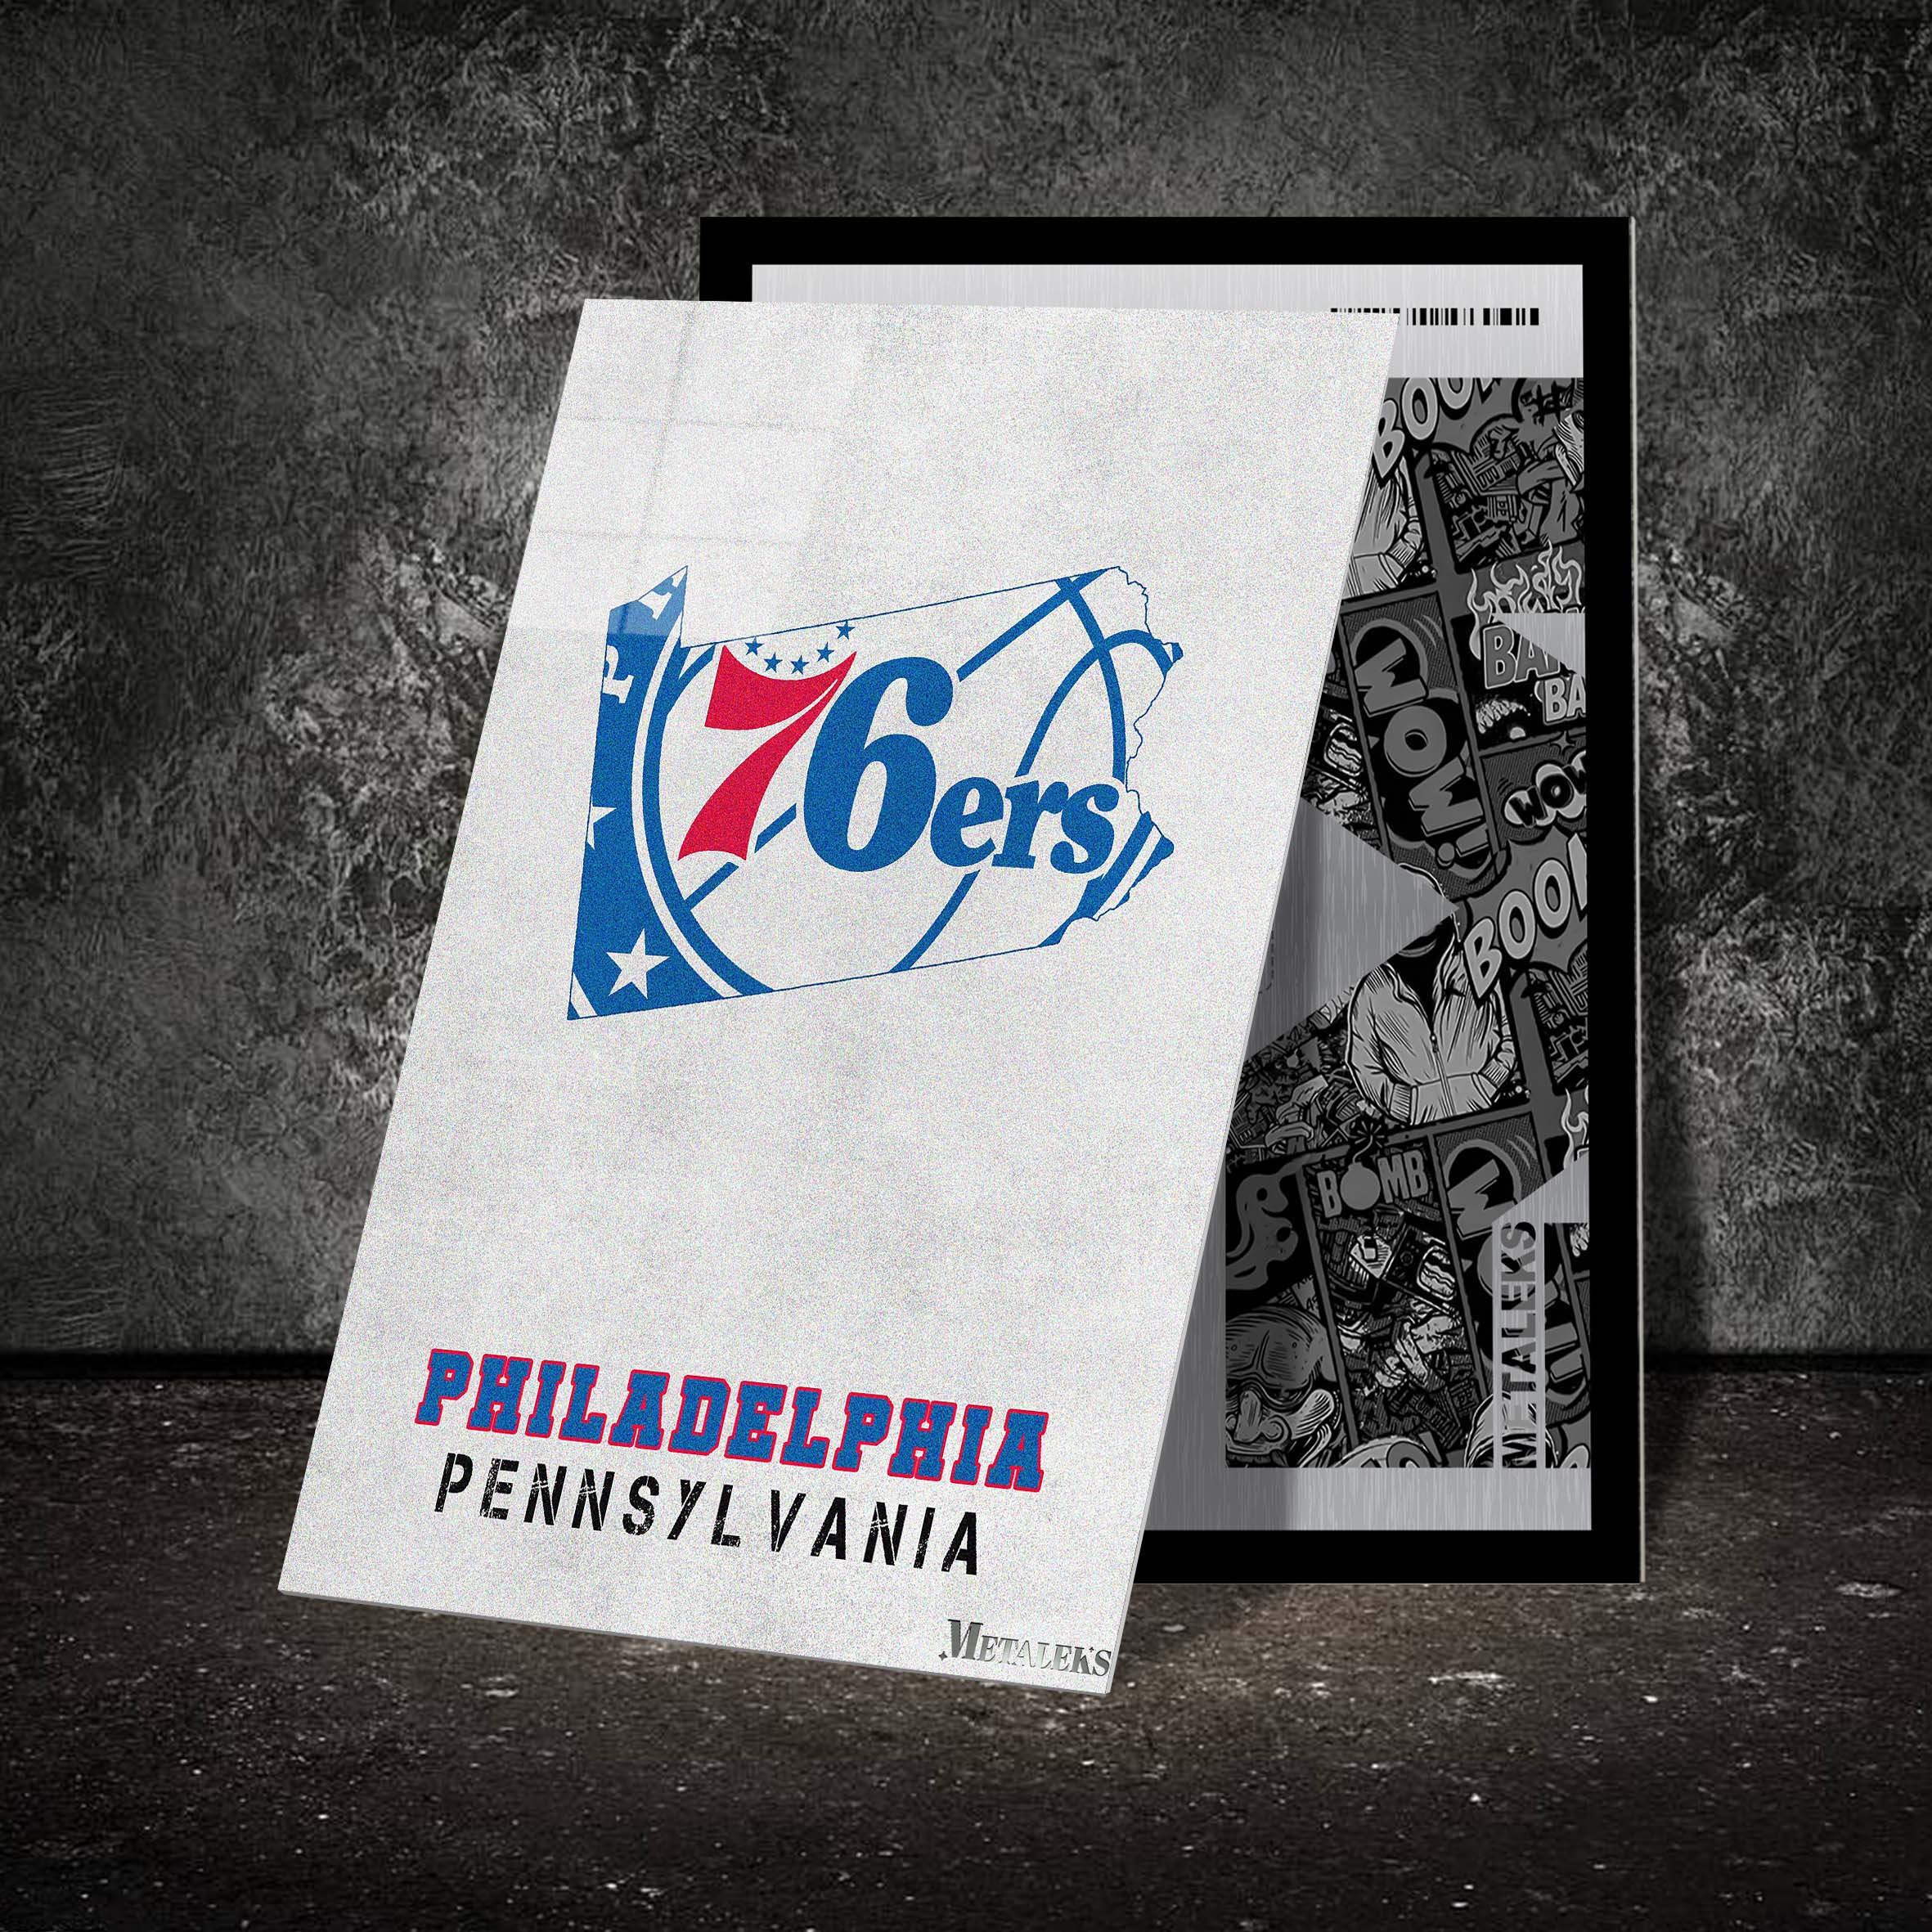 Philadelphia 76ers-designed by @Hoang Van Thuan